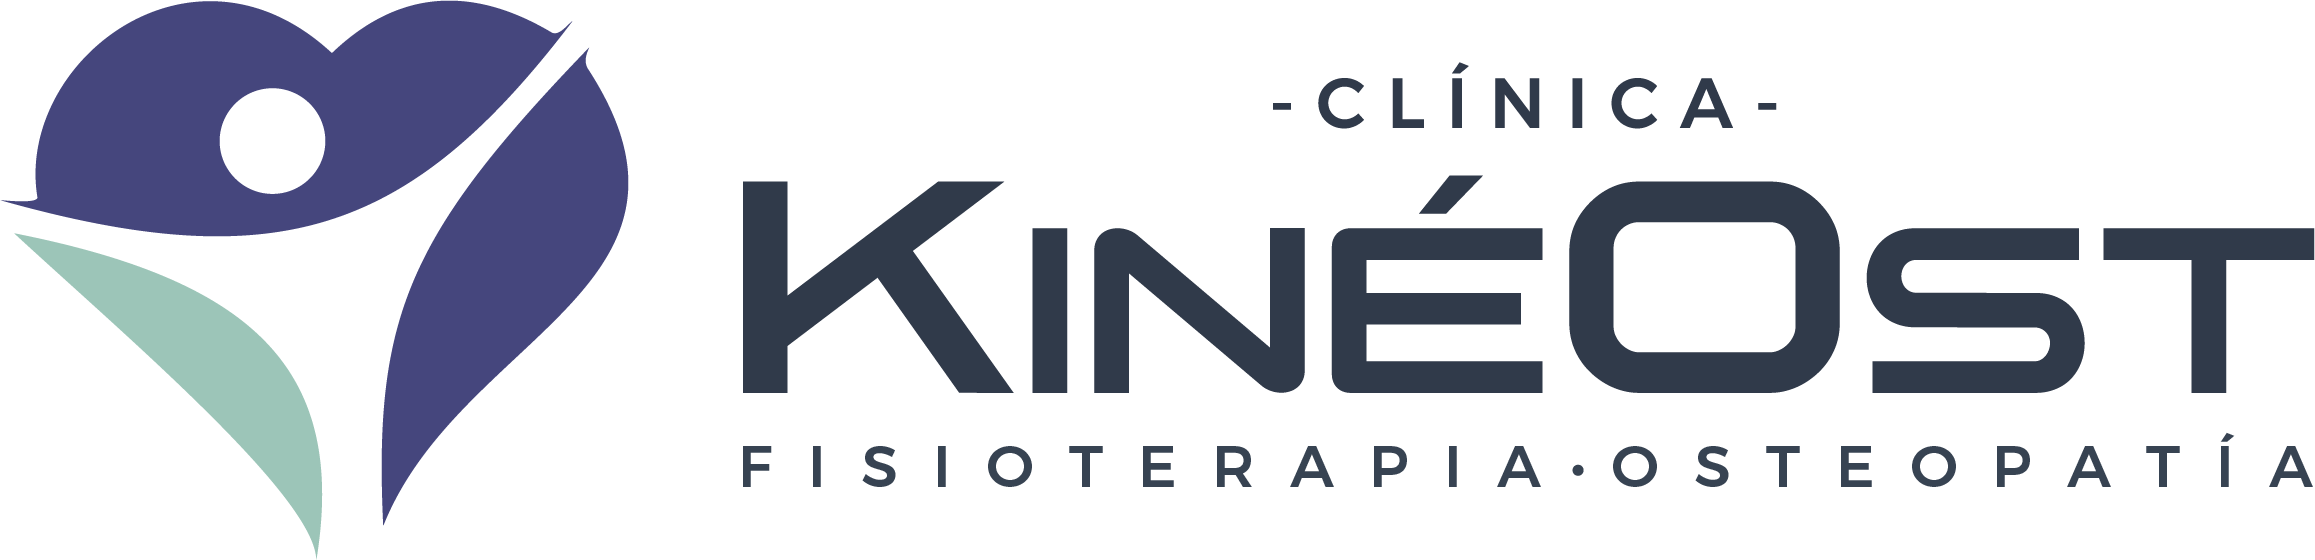 Clínica fisioterapia osteopatía Viladecans kineost logo